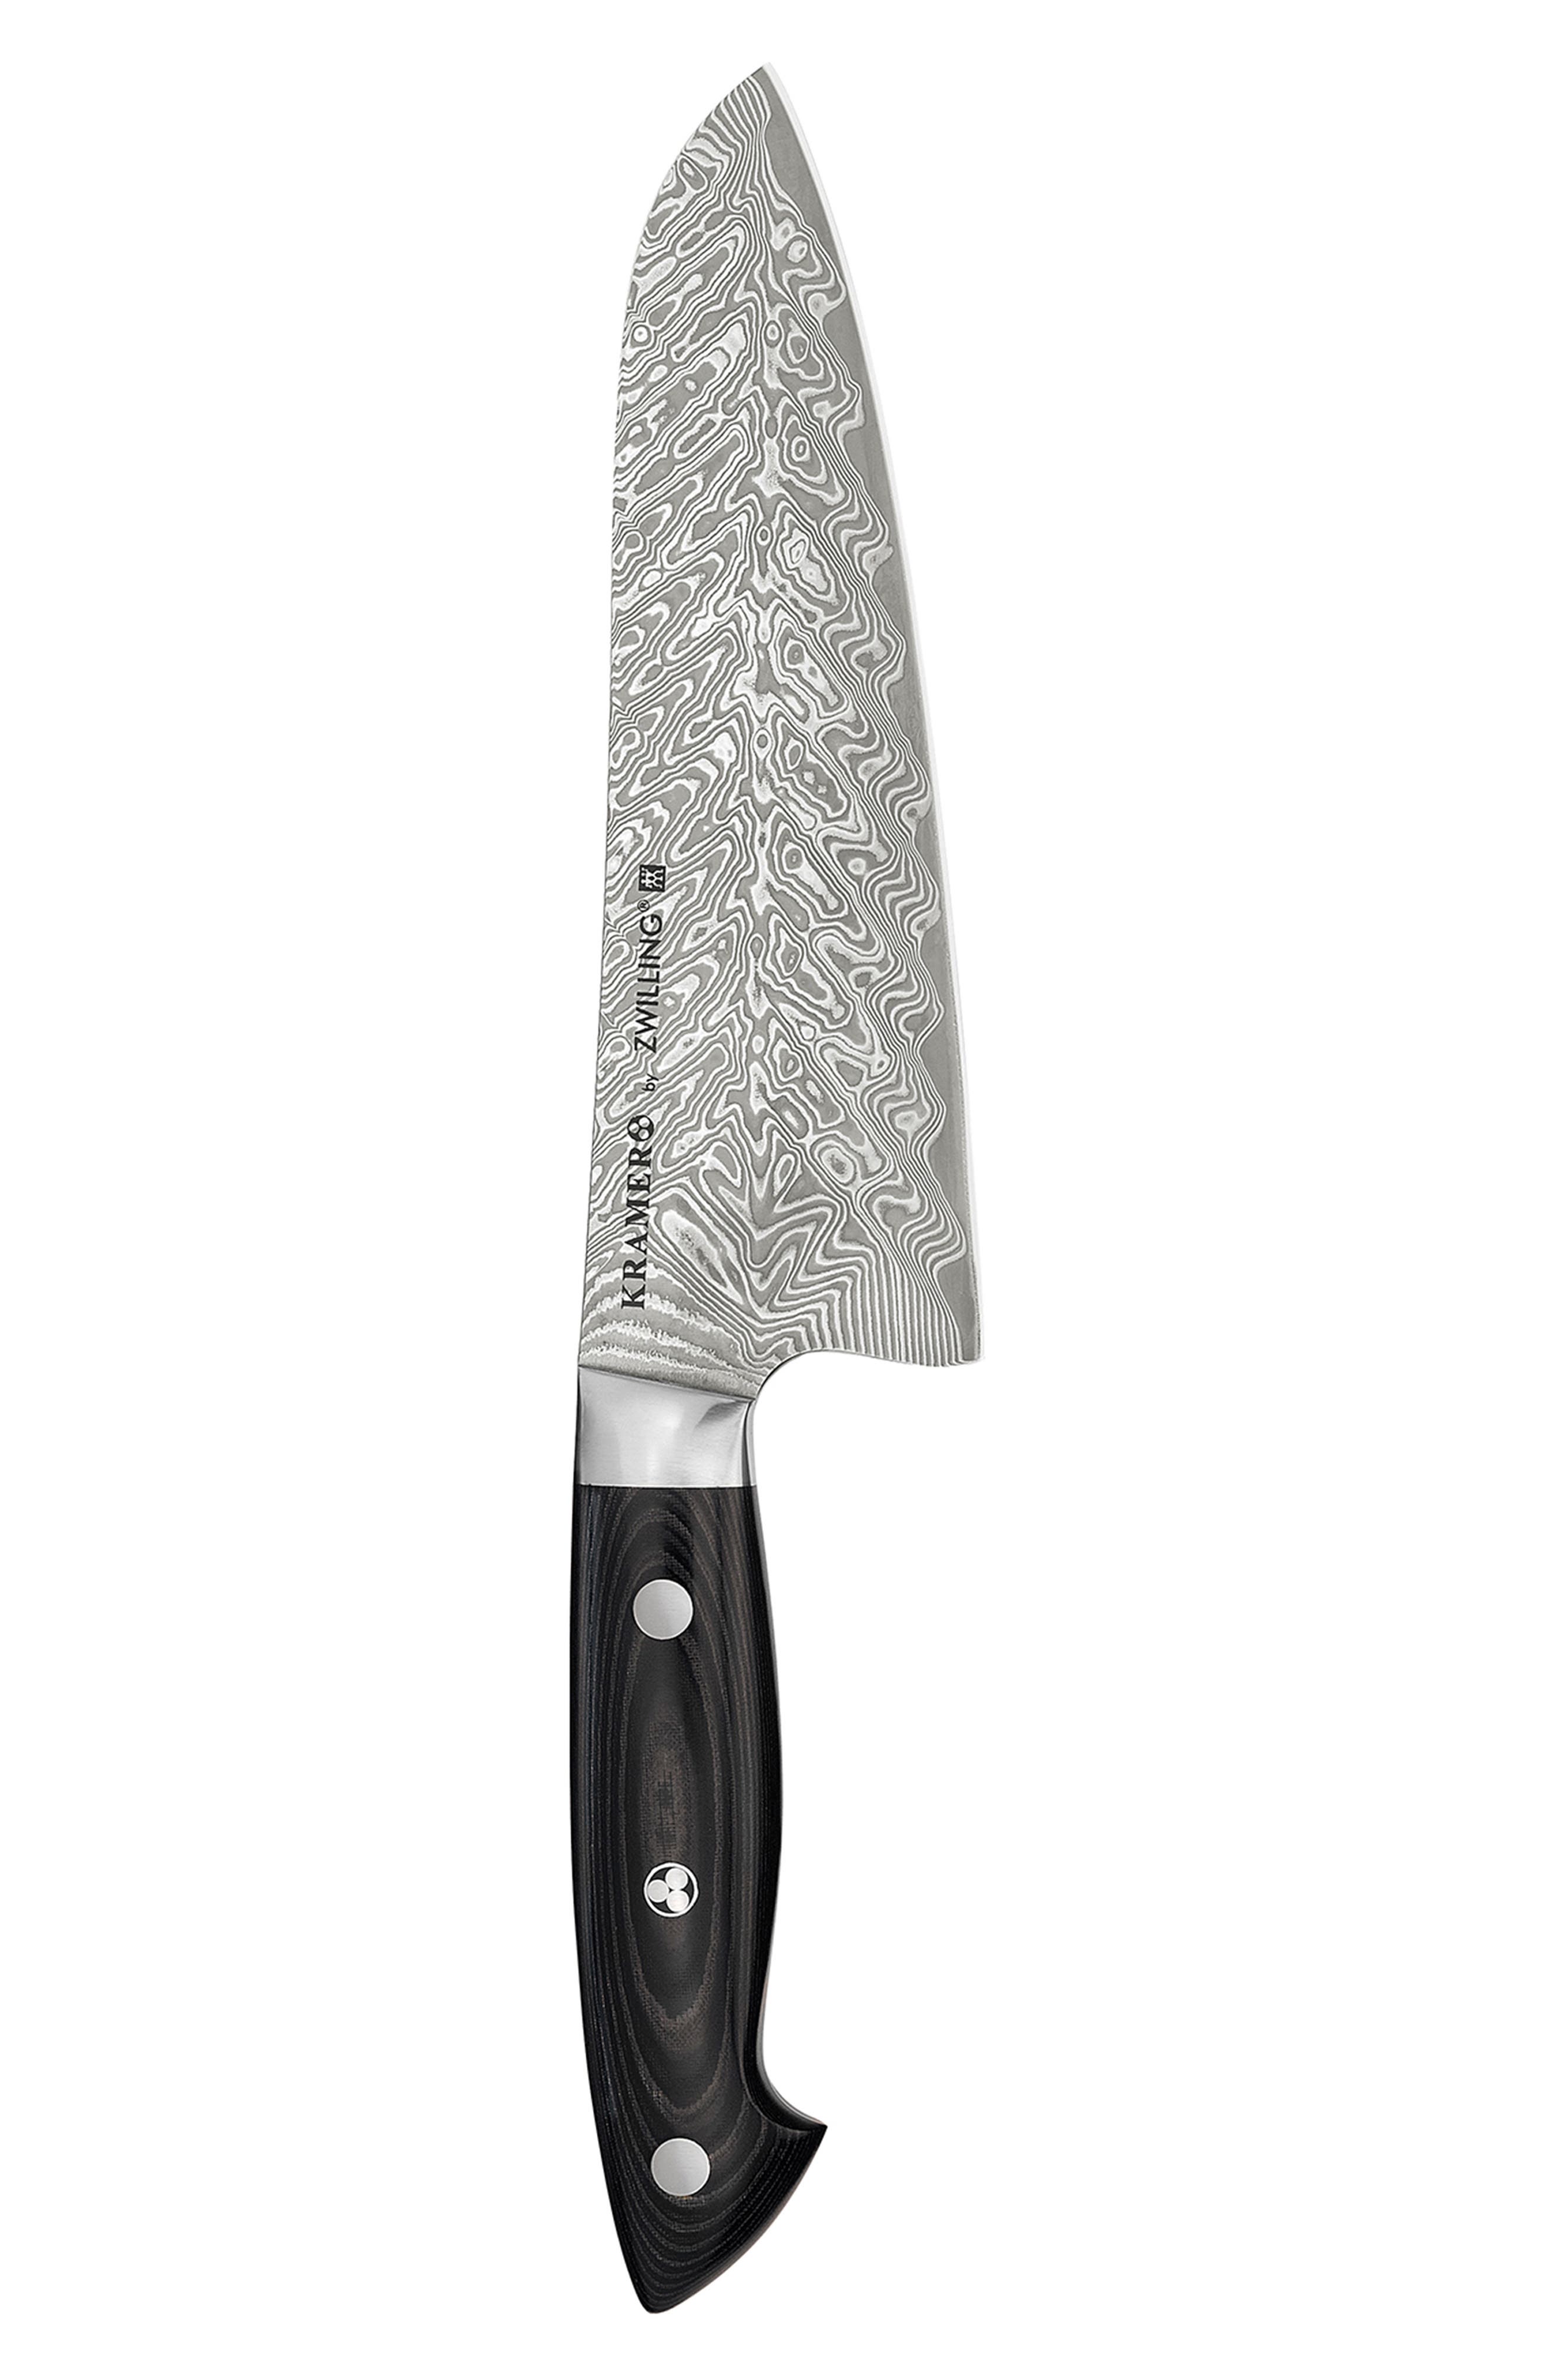 ZWILLING Kramer Euroline Damascus Collection 7-Inch Fine Edge Santoku Knife in Stainless Steel